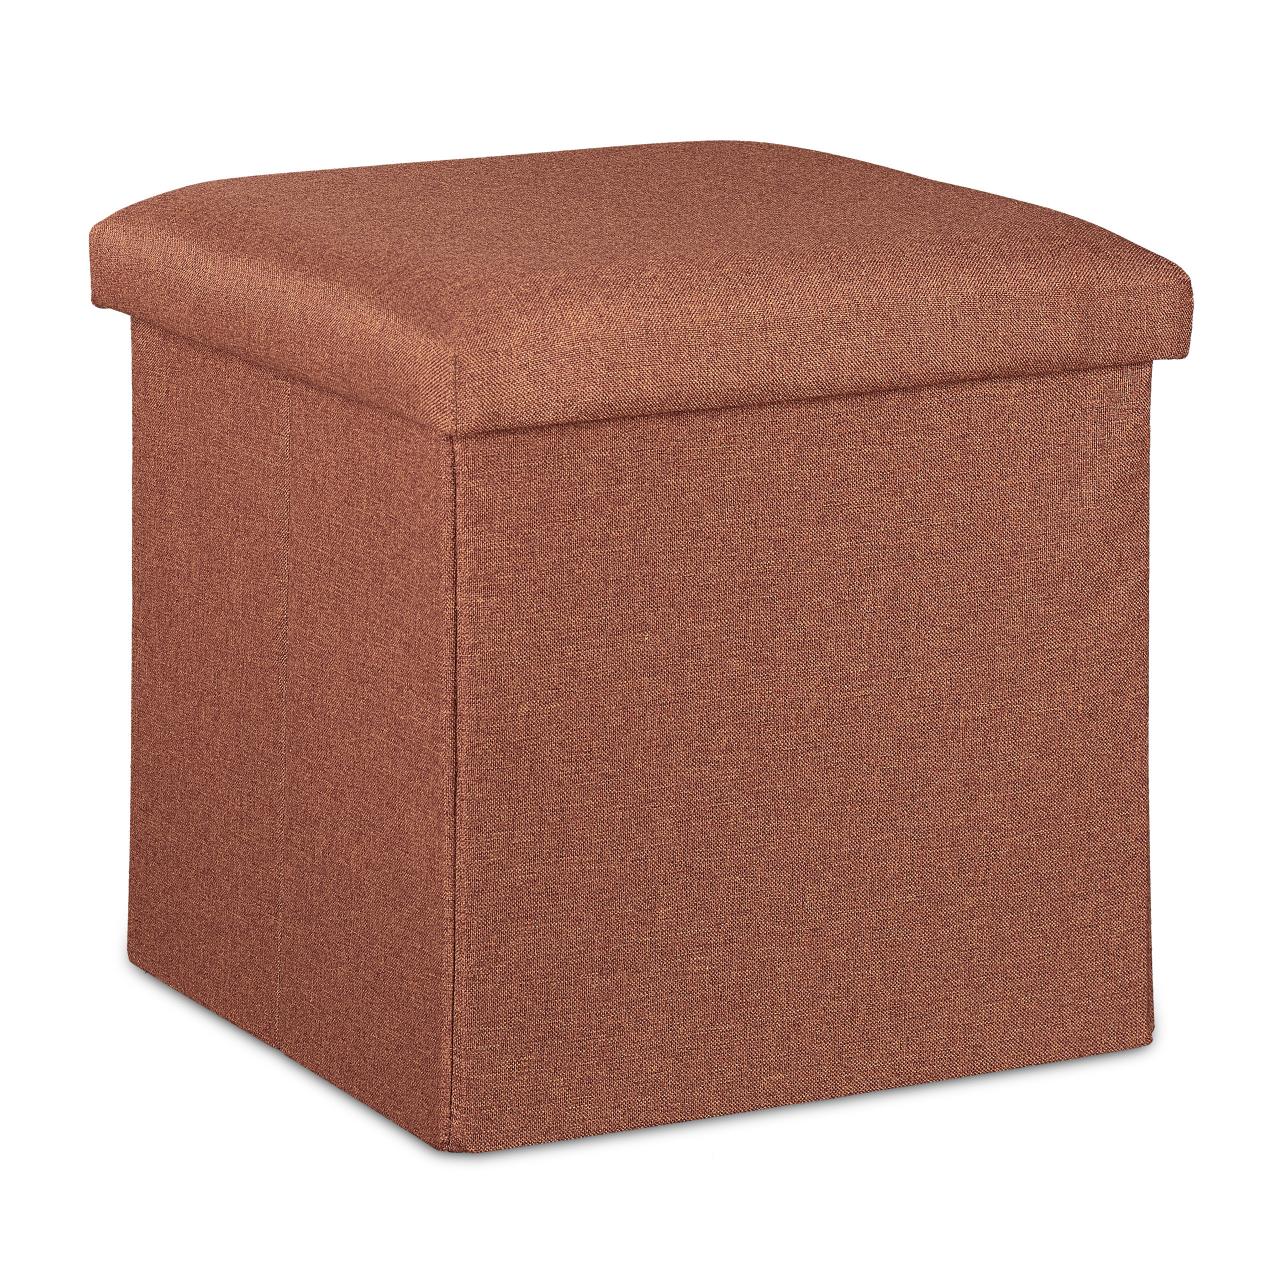 Stool with storage space, Upholstered Stool Storage Stool Cube Stool